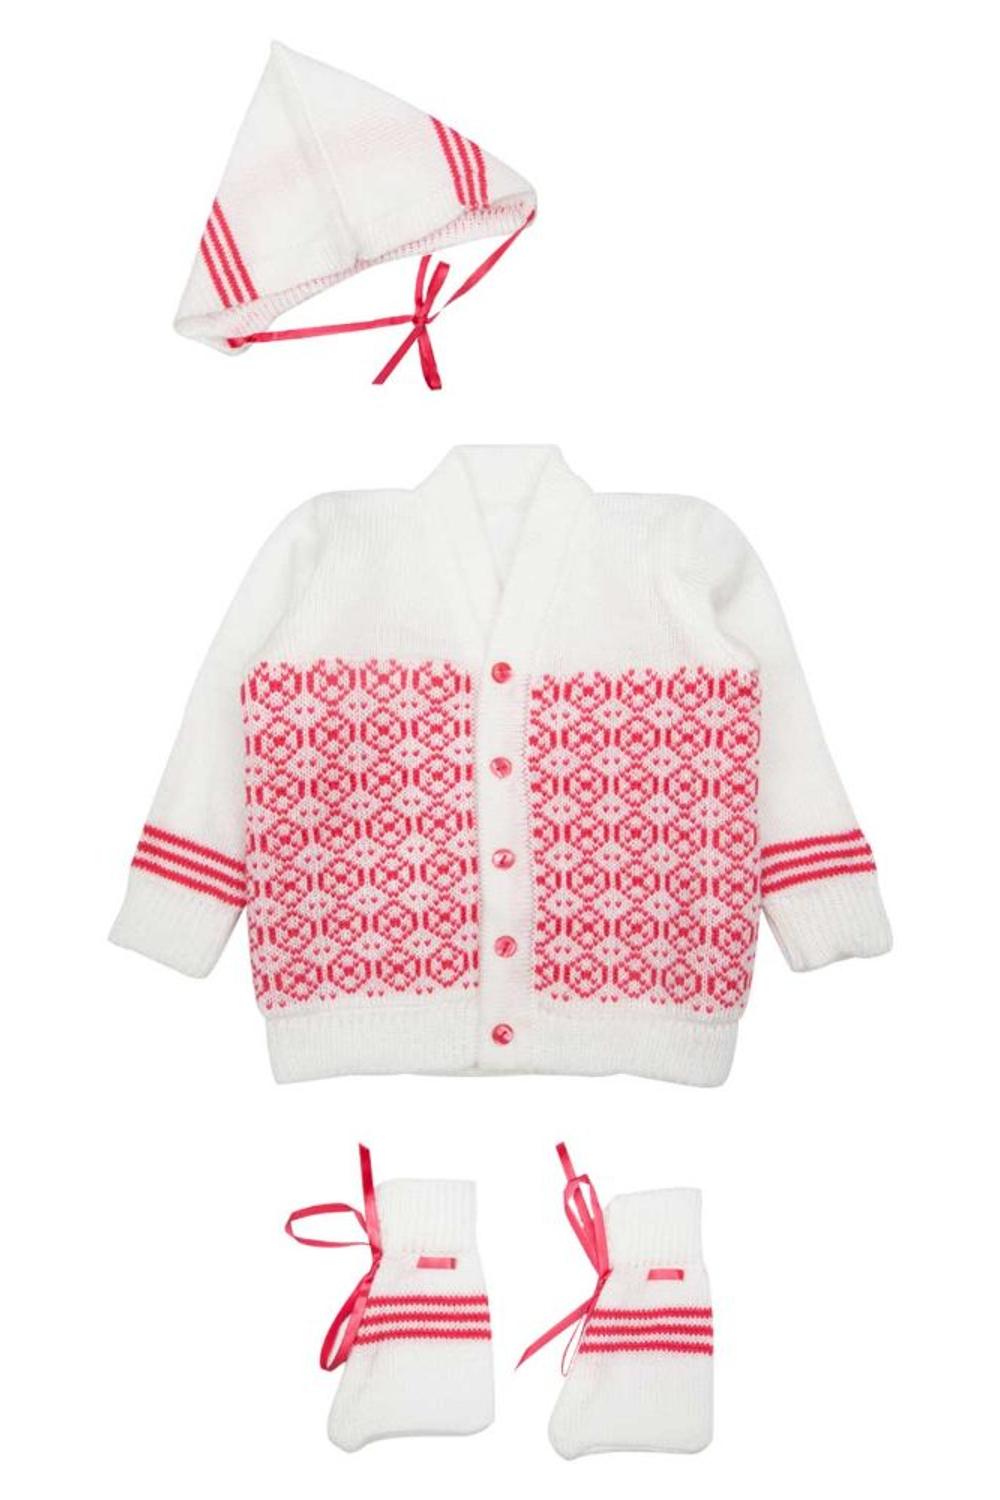 Mee Mee Baby Sweater Sets (White, Fushcia)